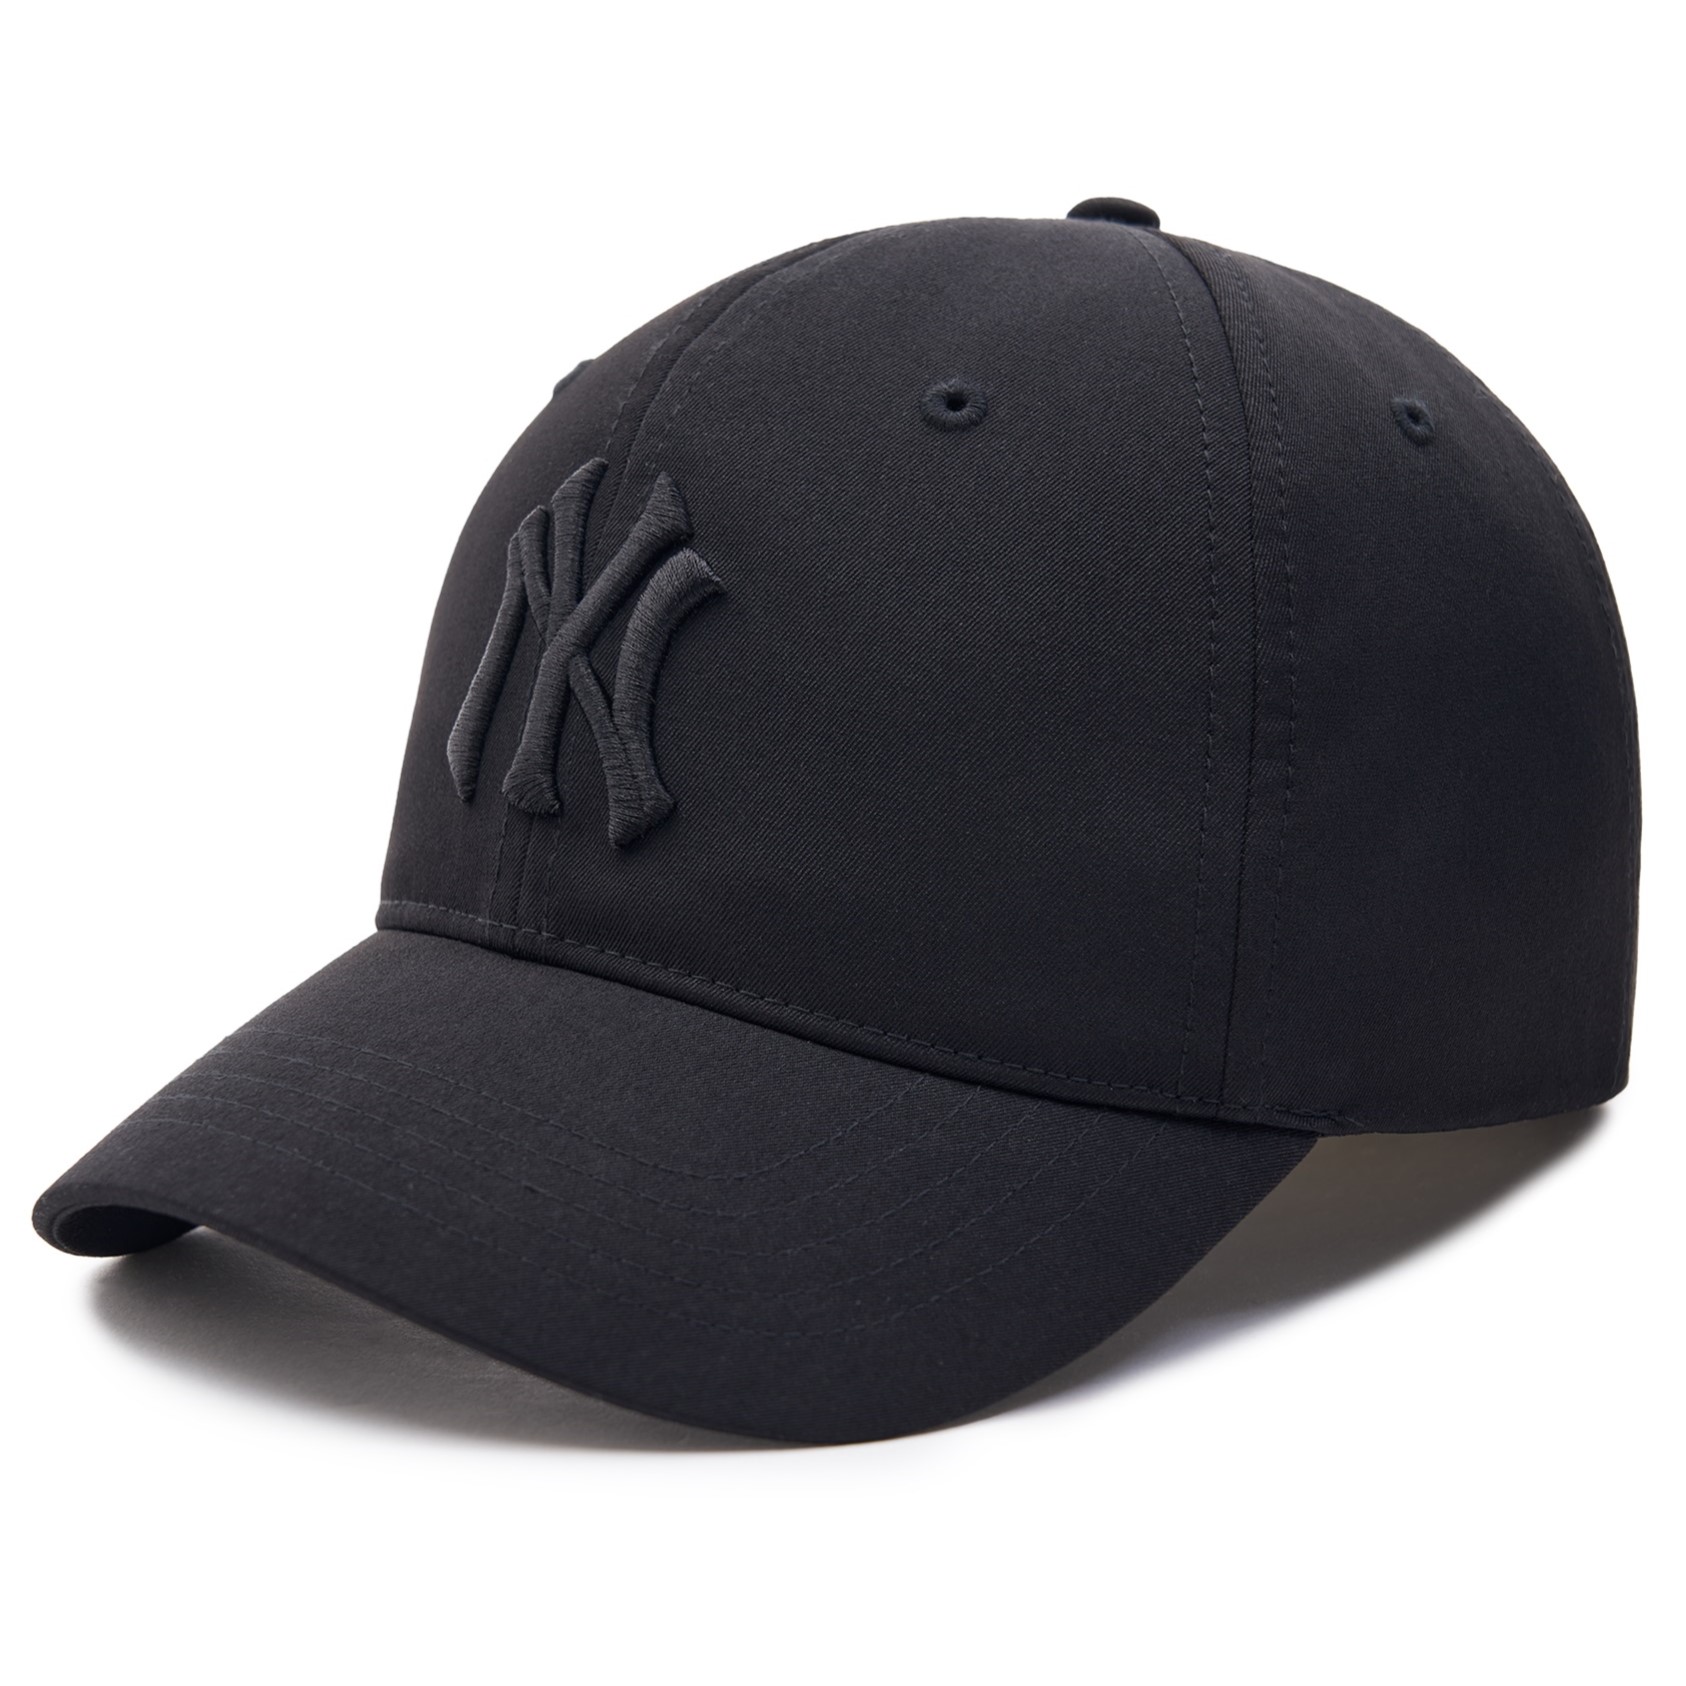 MŨ LƯỠI TRAI MLB NY FIELDER FIT FLEX UNSTRUCTURED BALL CAP NEW YORK YANKEES 3ACP0393N-50BKS 7